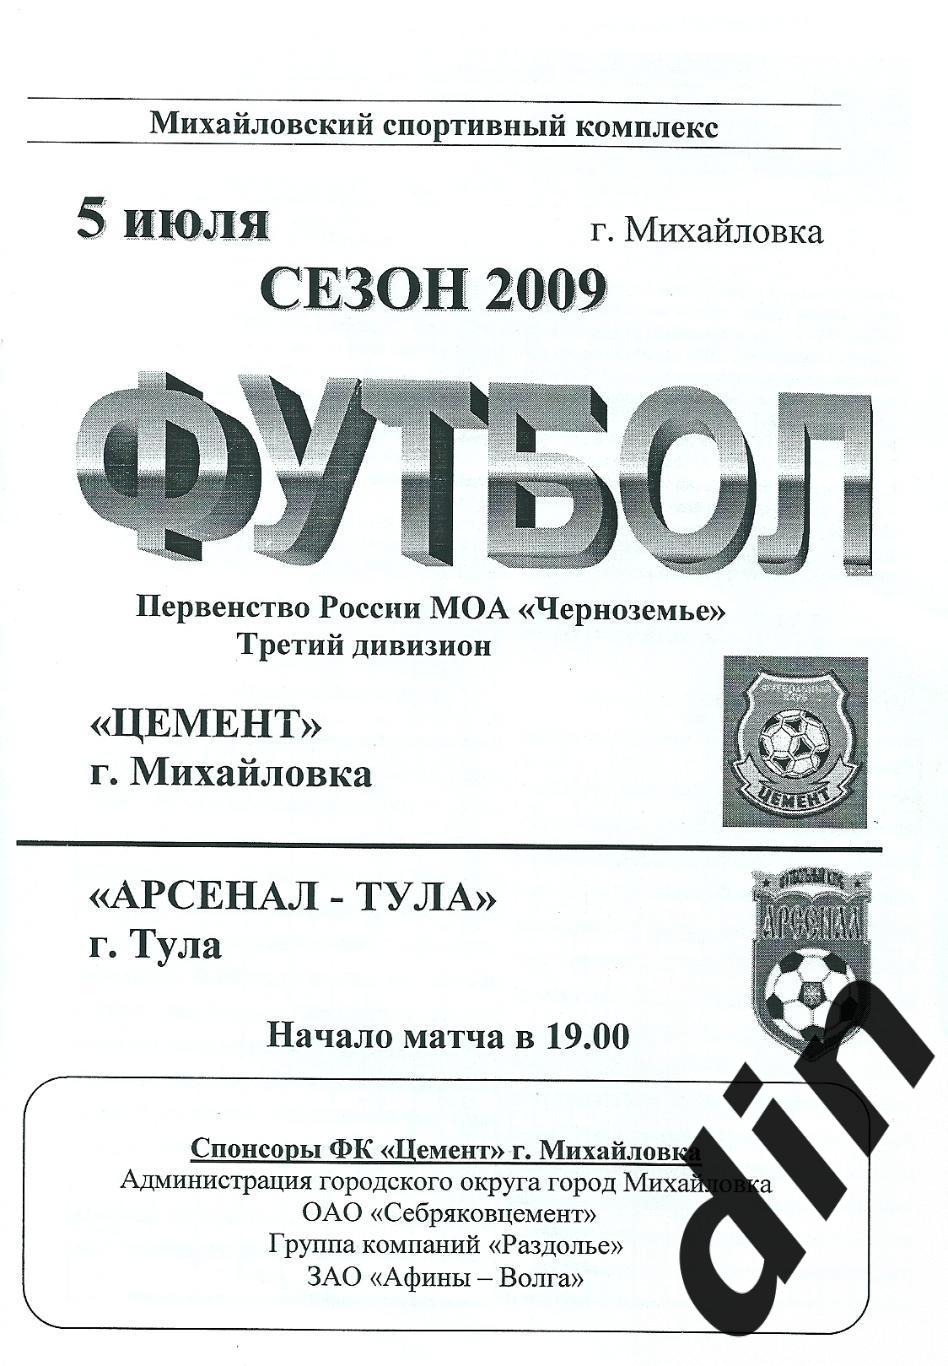 Цемент Михайловка - Арсенал-Тула Тула 05.07.2009